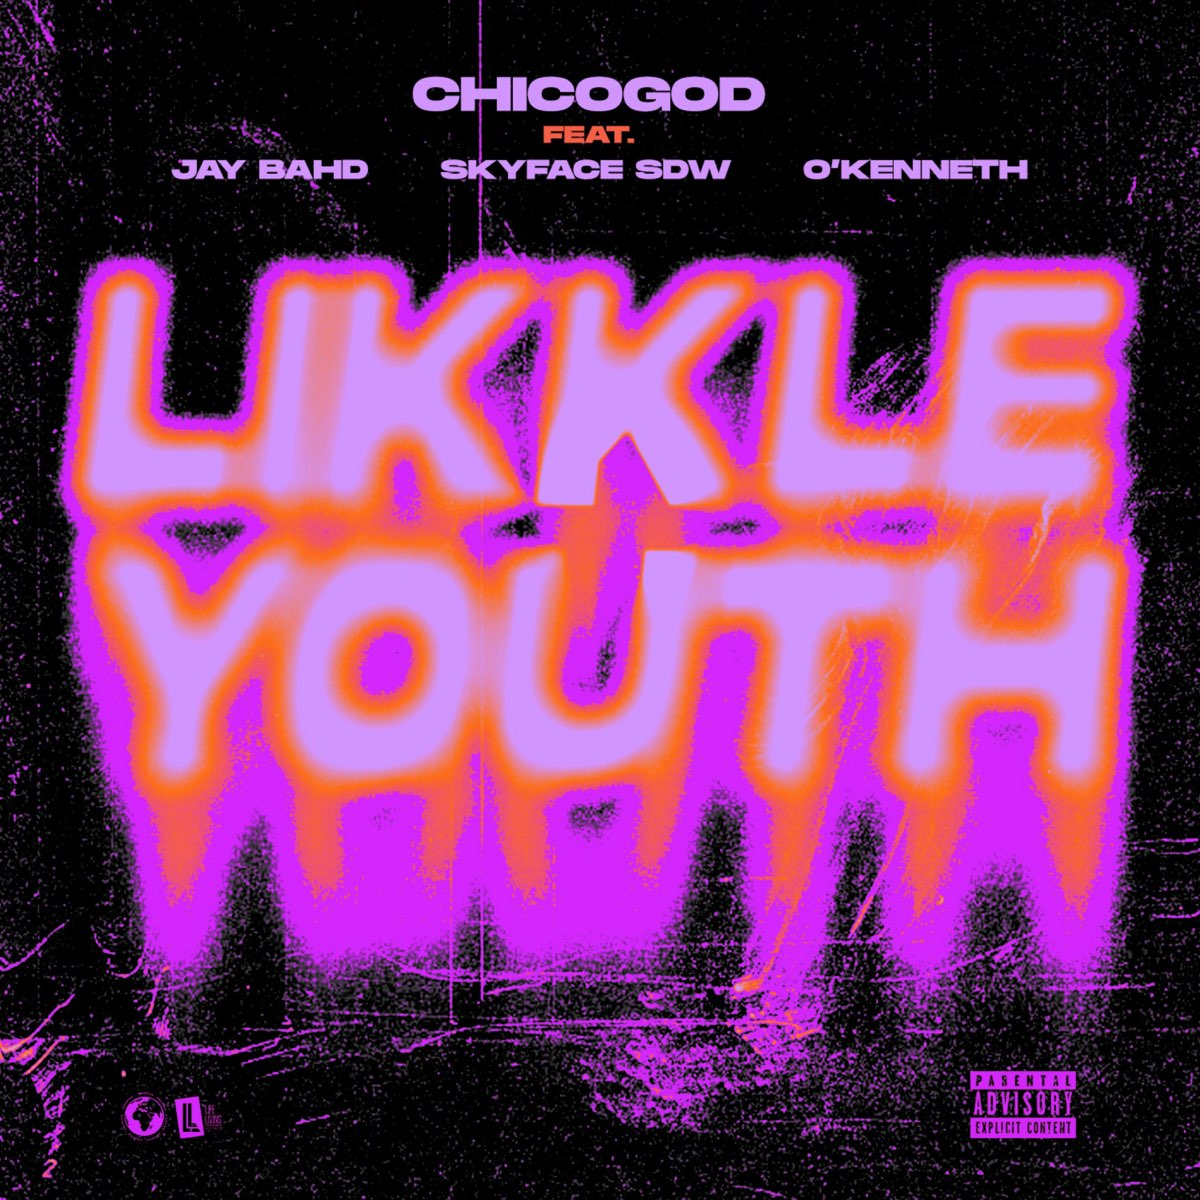 Chicogod-Likkle-Youth-ft-Jay-Bahd-x-Skyface-SDW-x-Okenneth-www.xtrabeatz.com